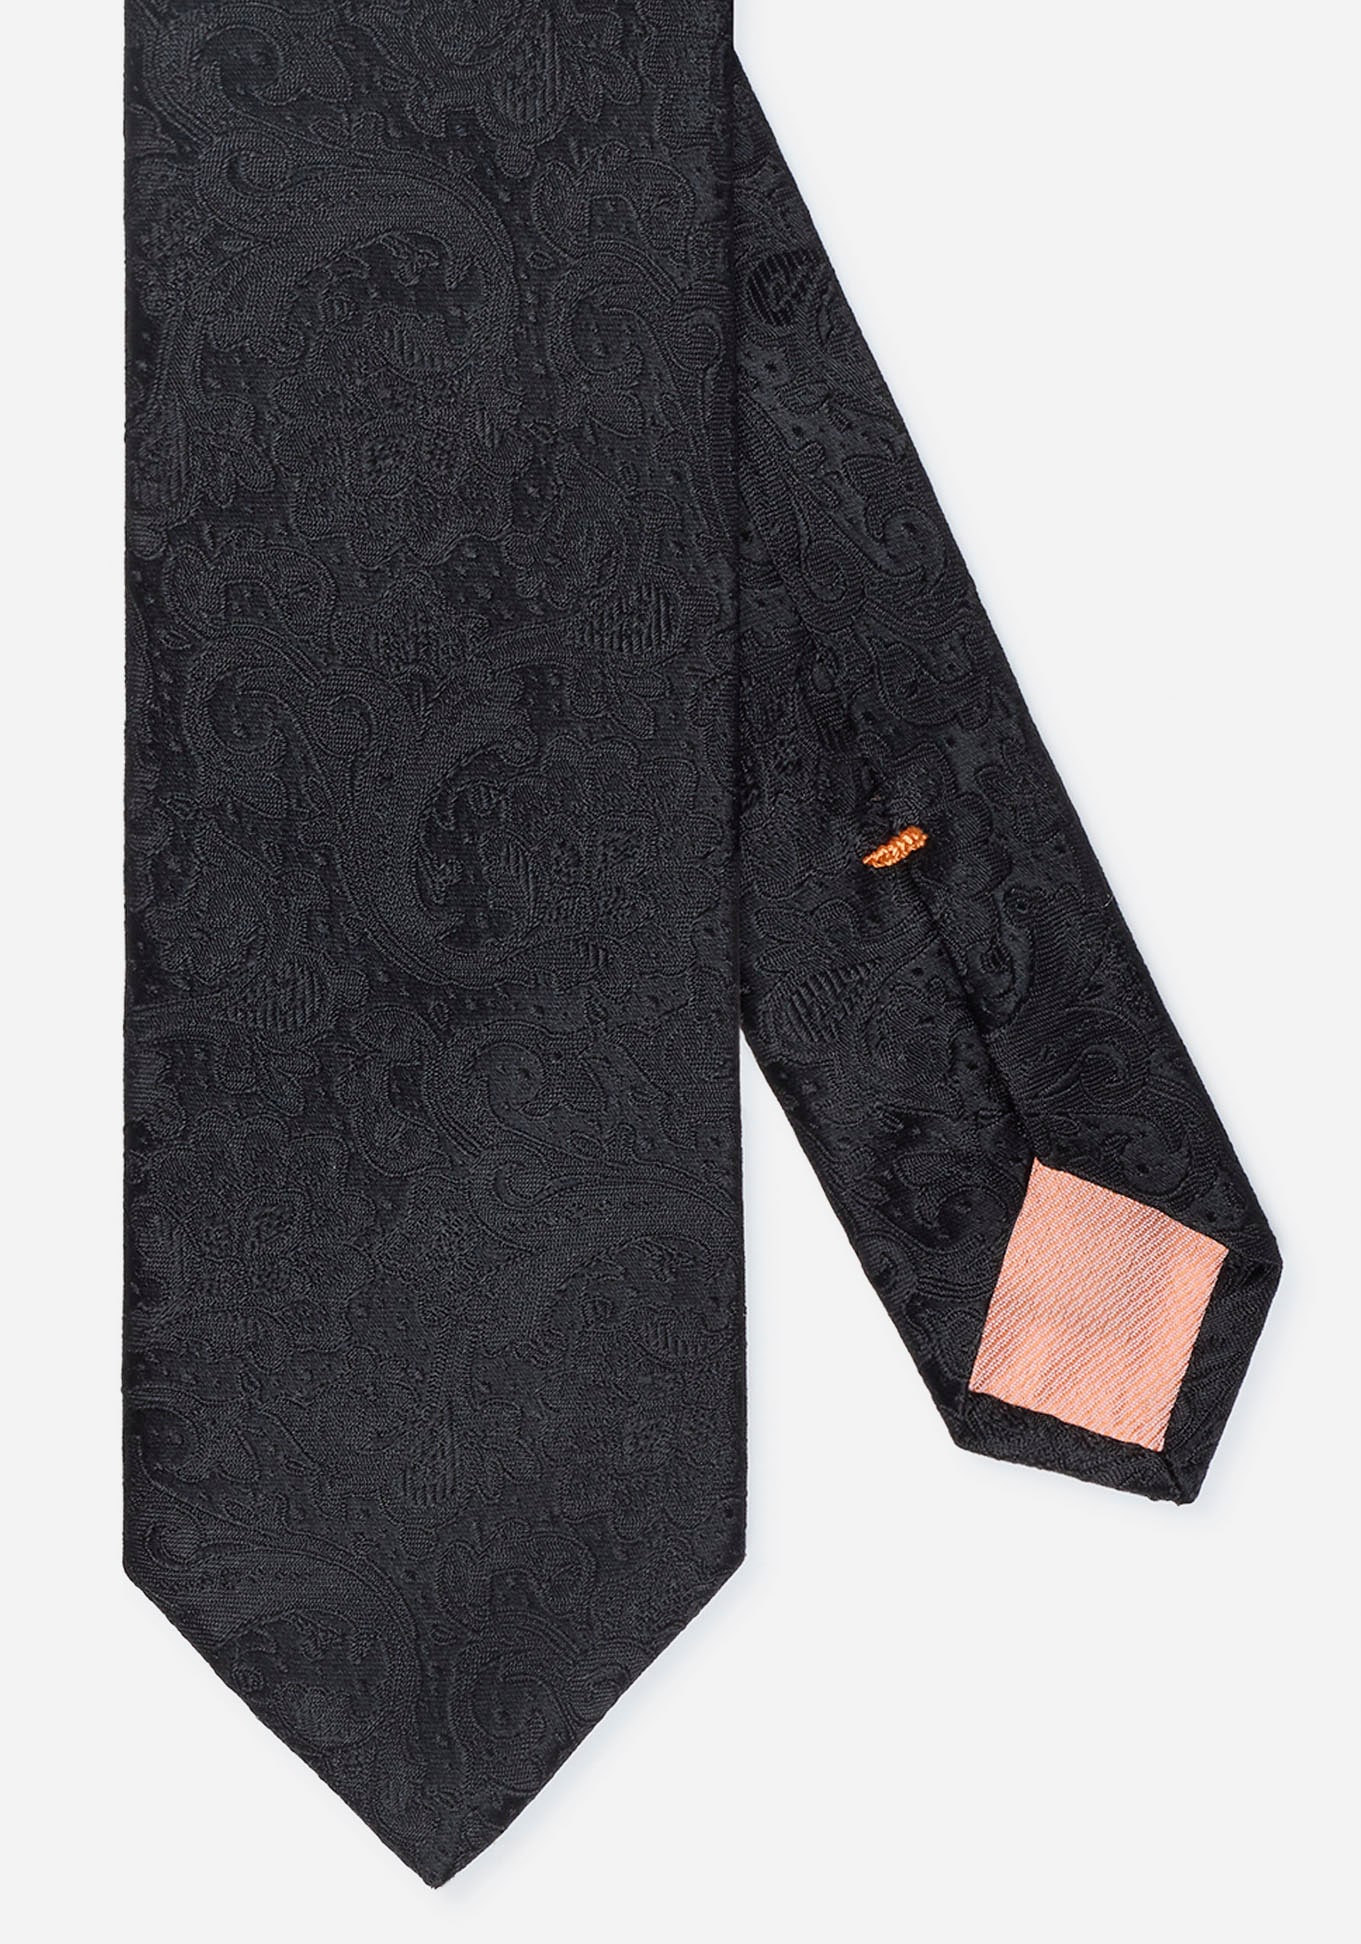 MONTI Krawatte »LUAN«, aus reiner Seide, Paisley-Muster